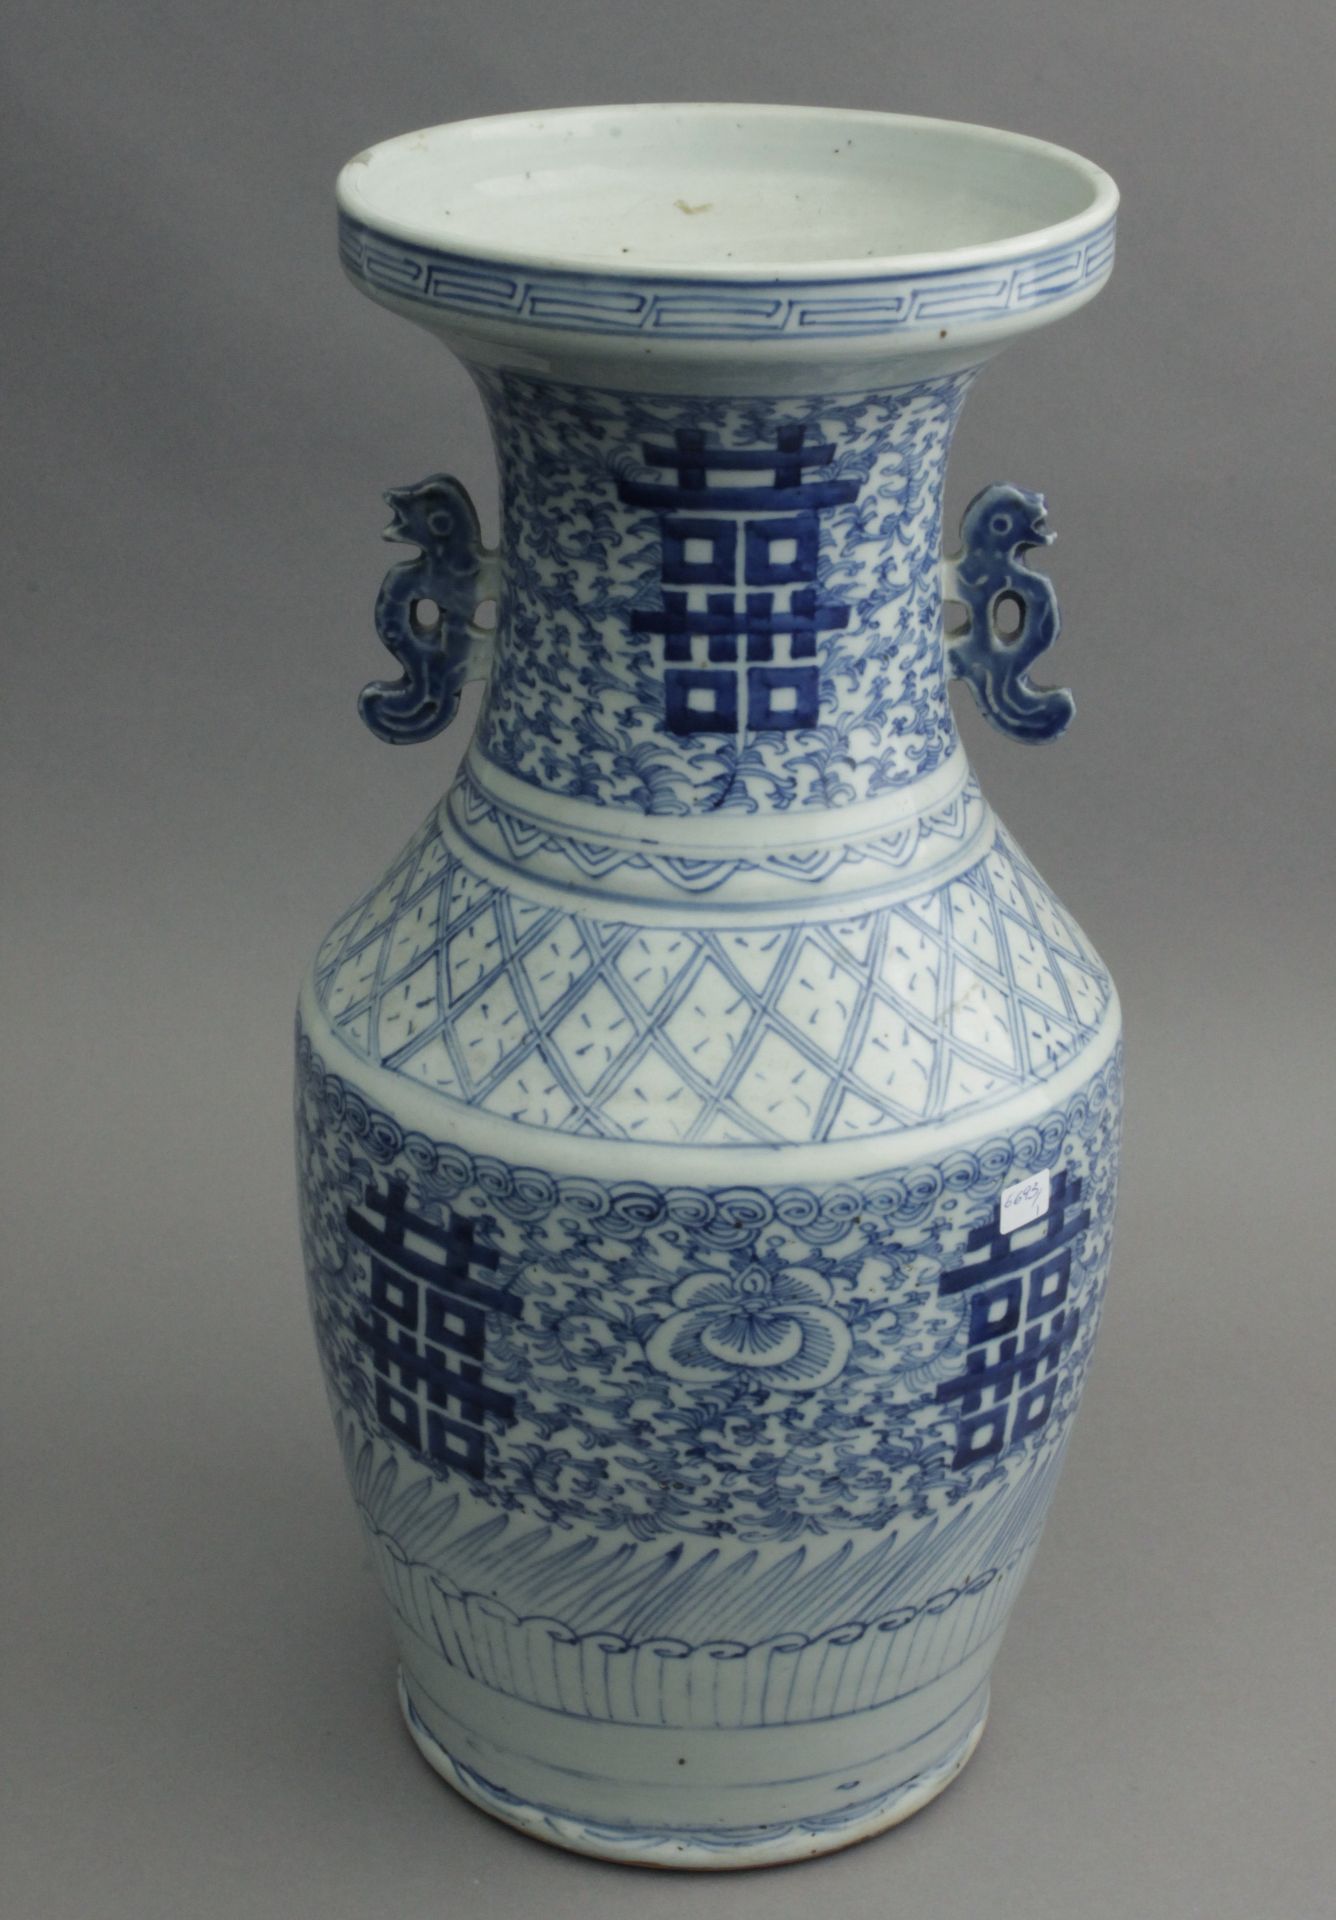 A 20th century Chinese celadon vase